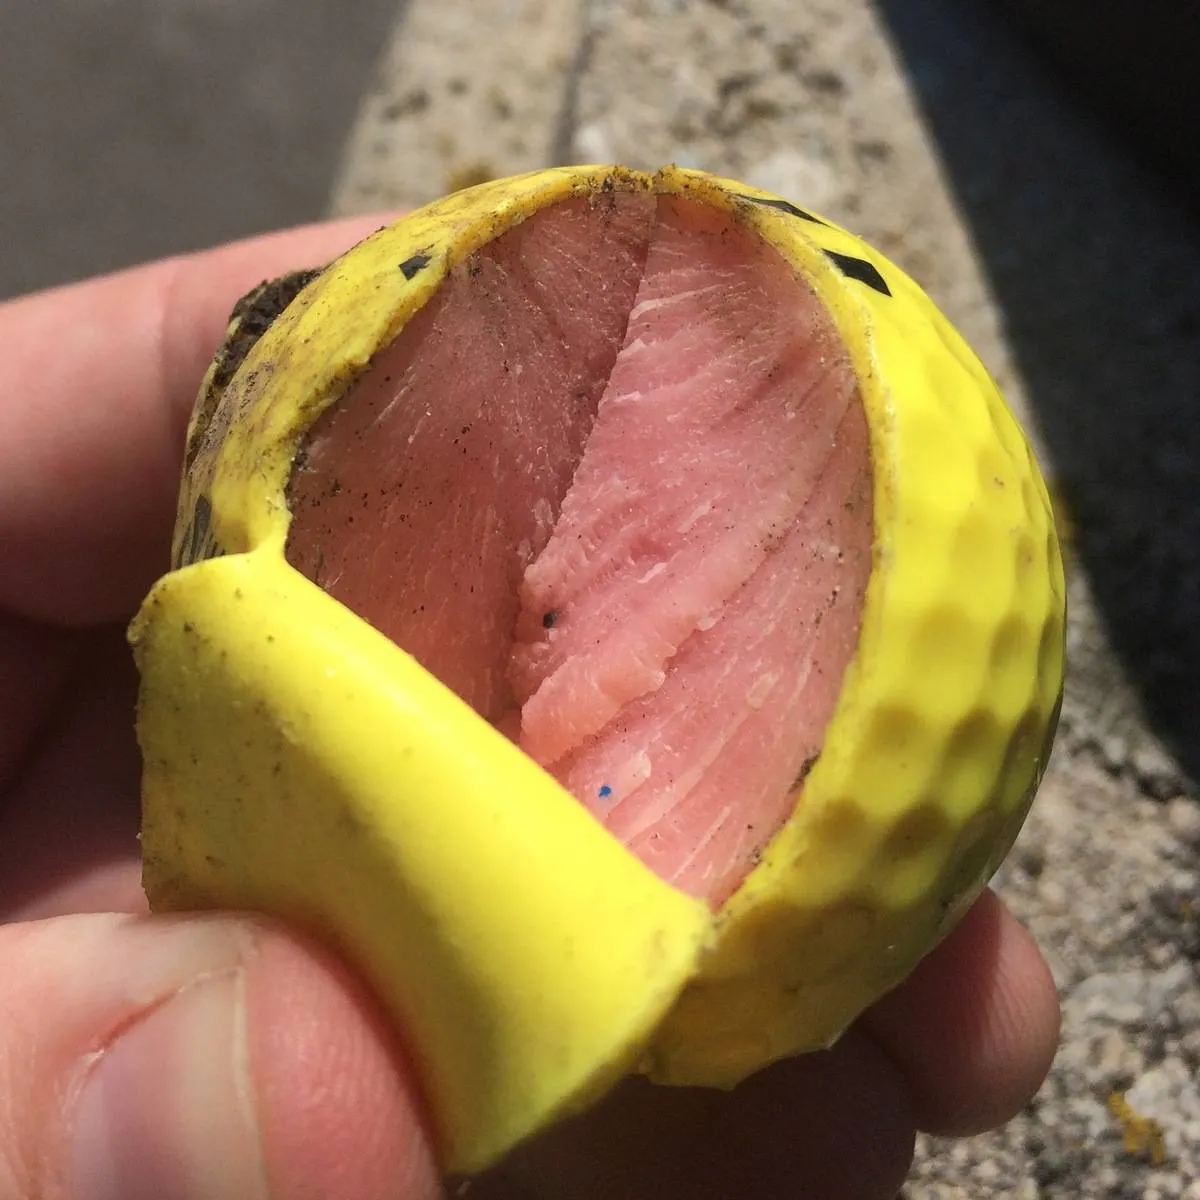 inside of golf ball looks like meat